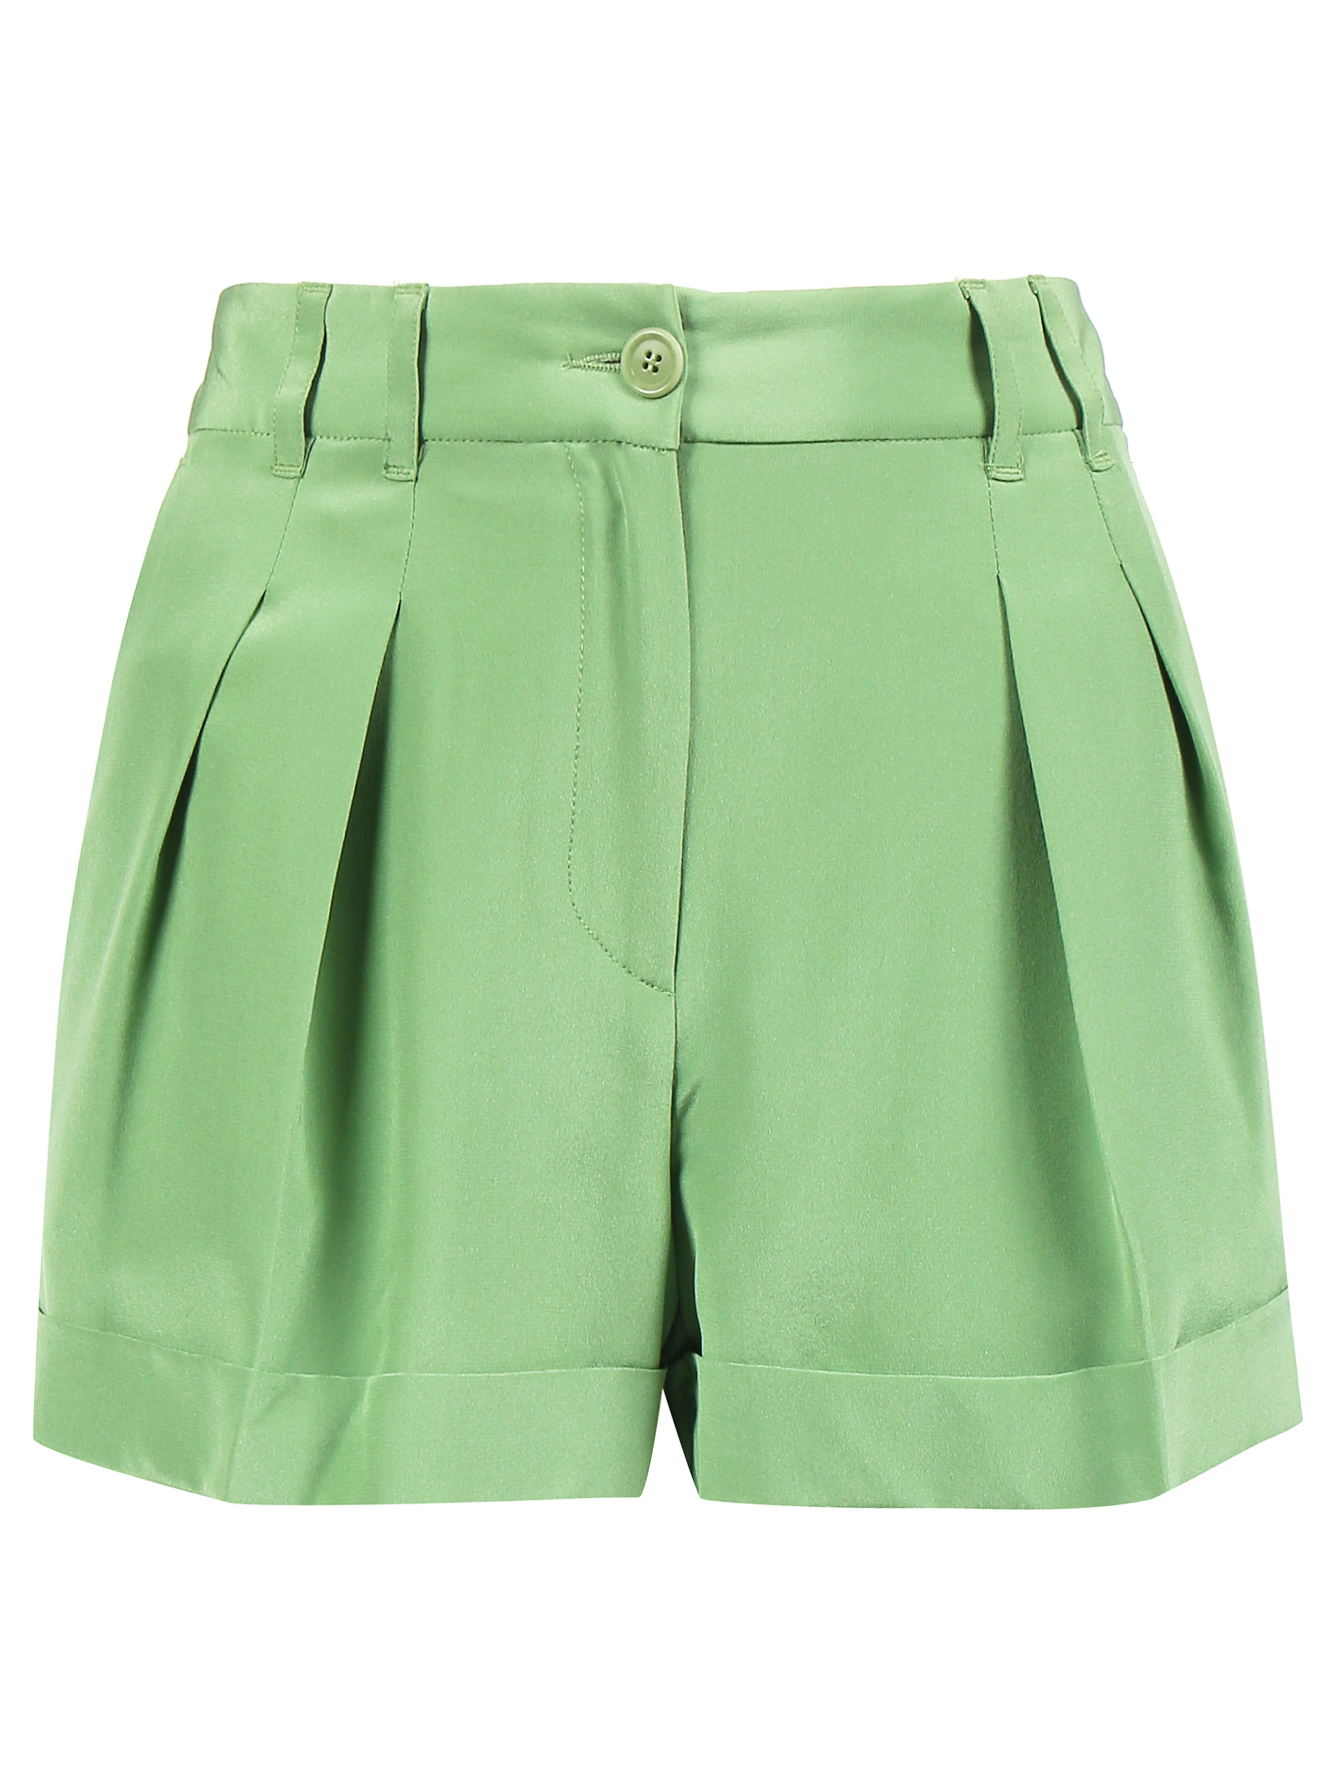 Зелёные шорты юбка валберис